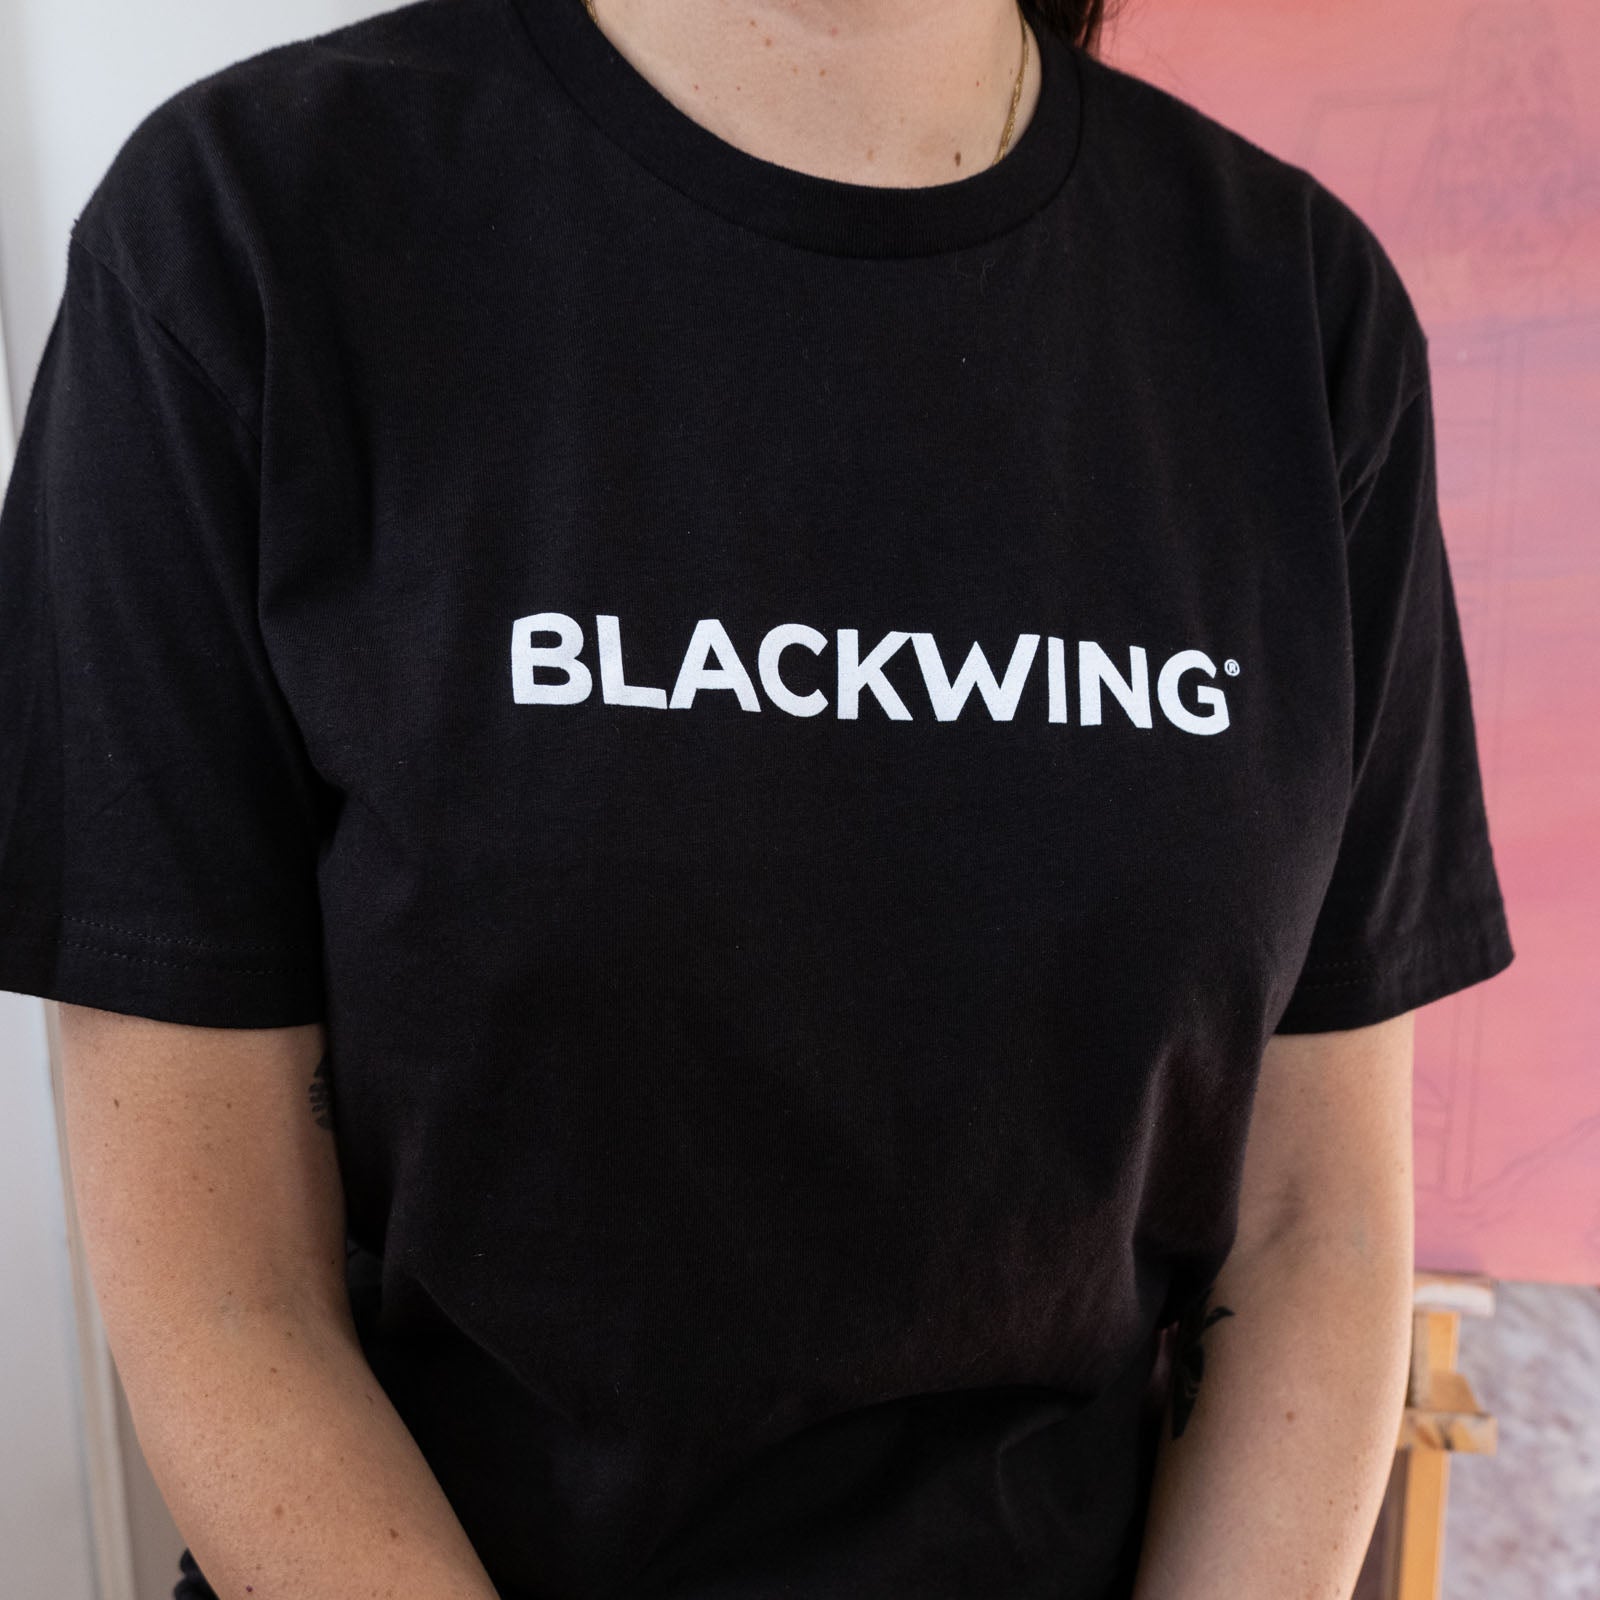 A woman wearing a Blackwing Logo Shirt from California.